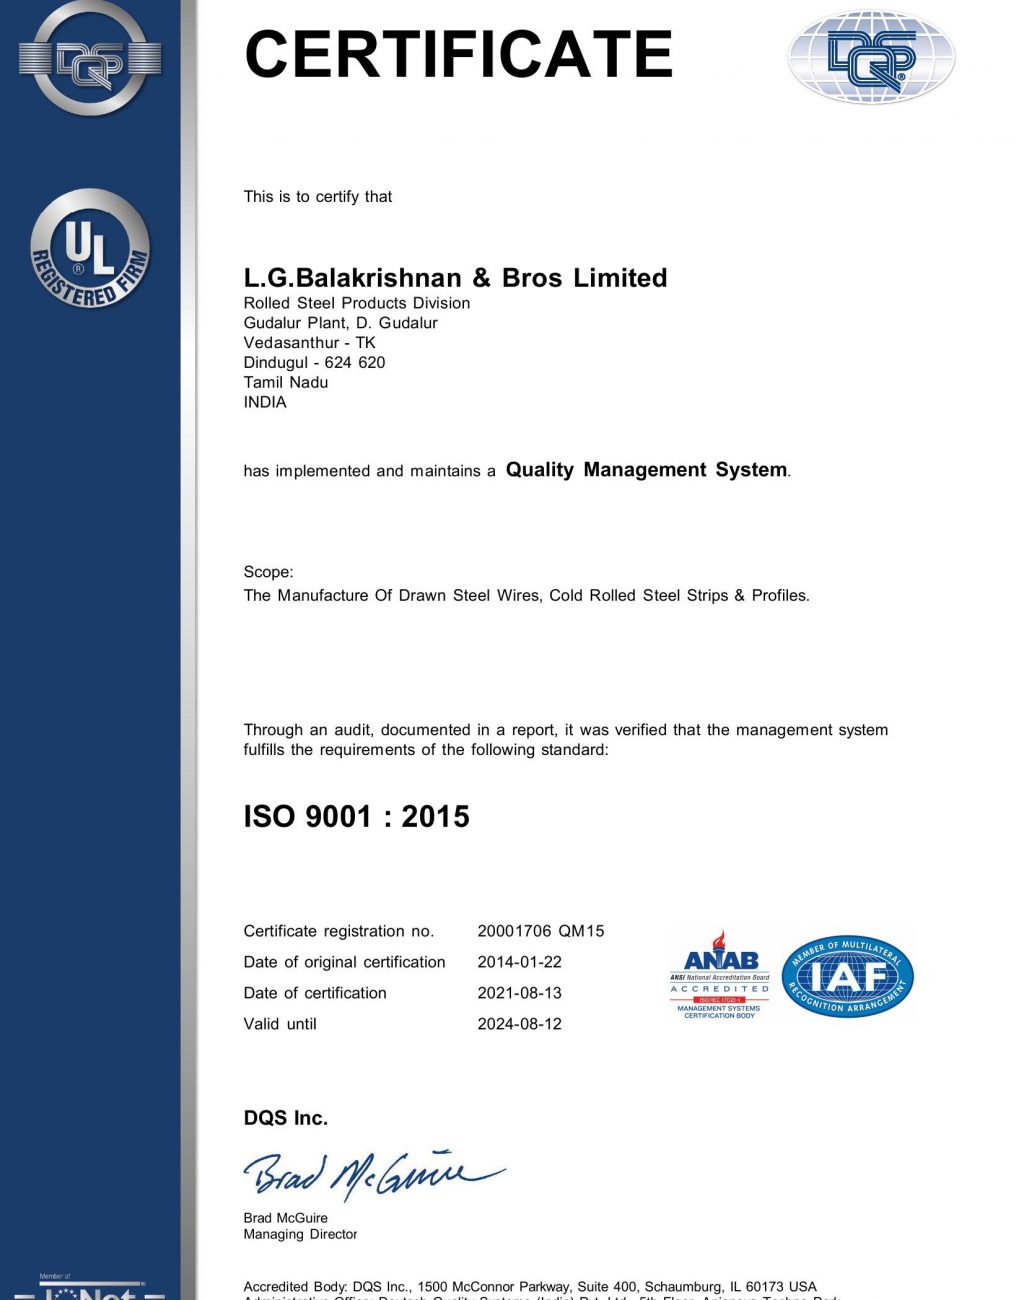 LGB RSPD, Gudalur ISO 9001 2015